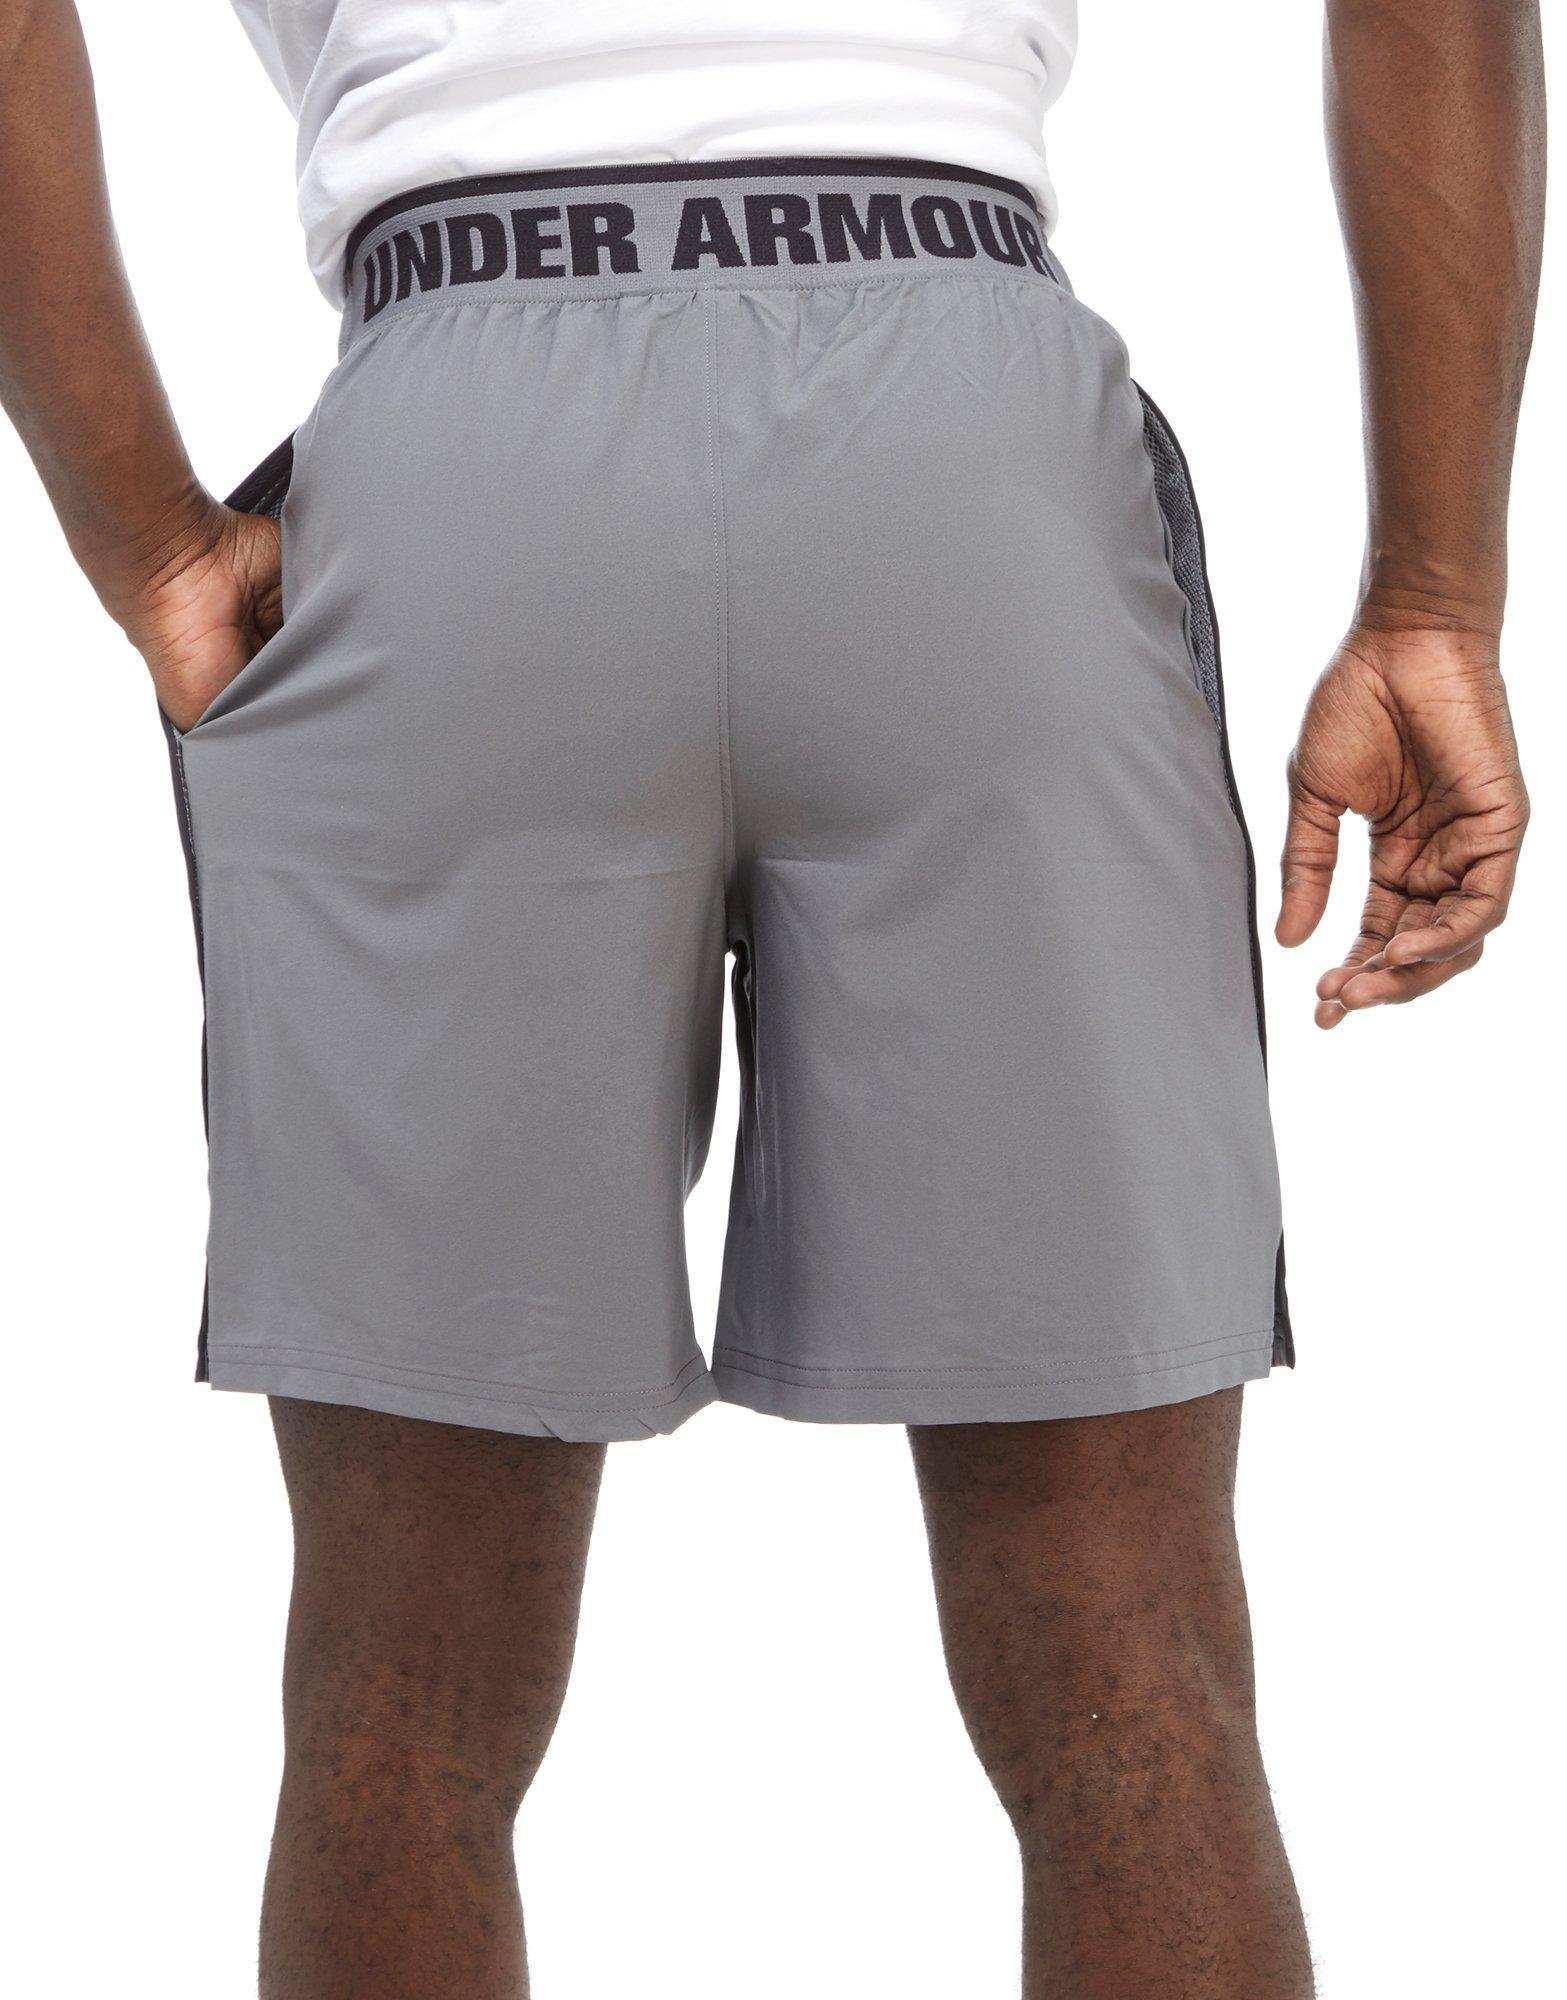 under armour mirage 8 inch shorts